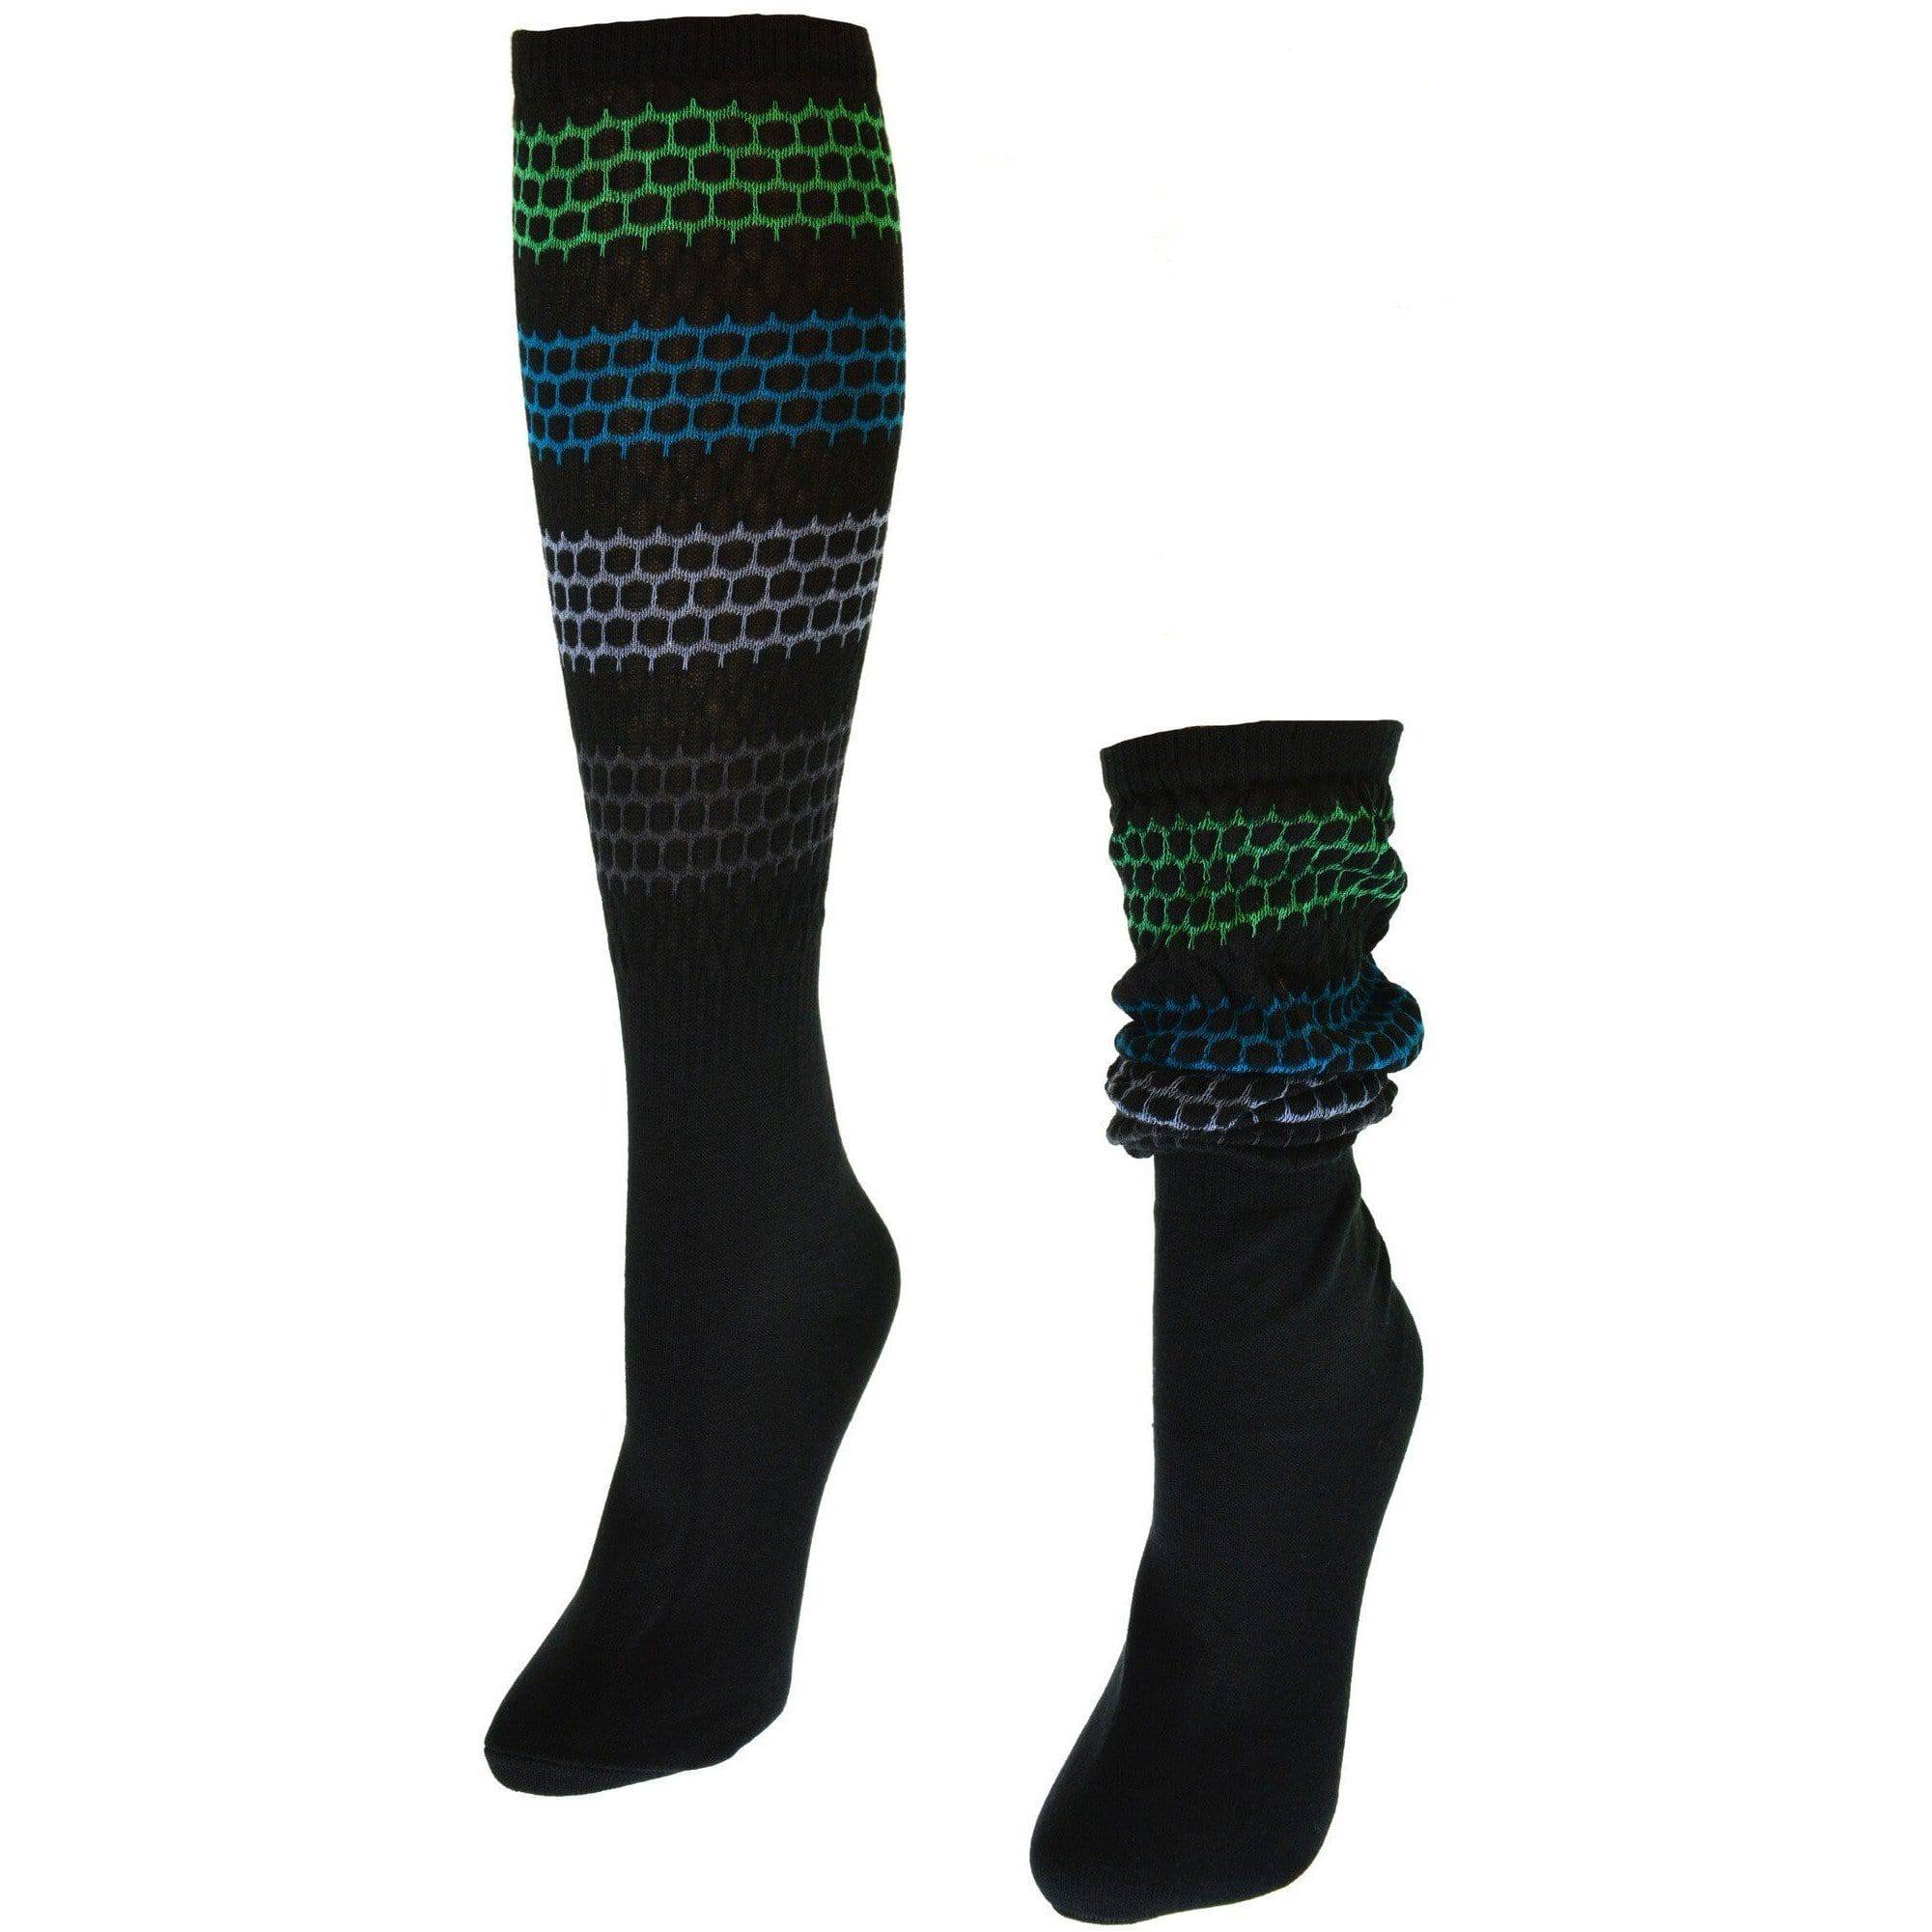 Women's Slouch or Knee High Organic Cotton Socks